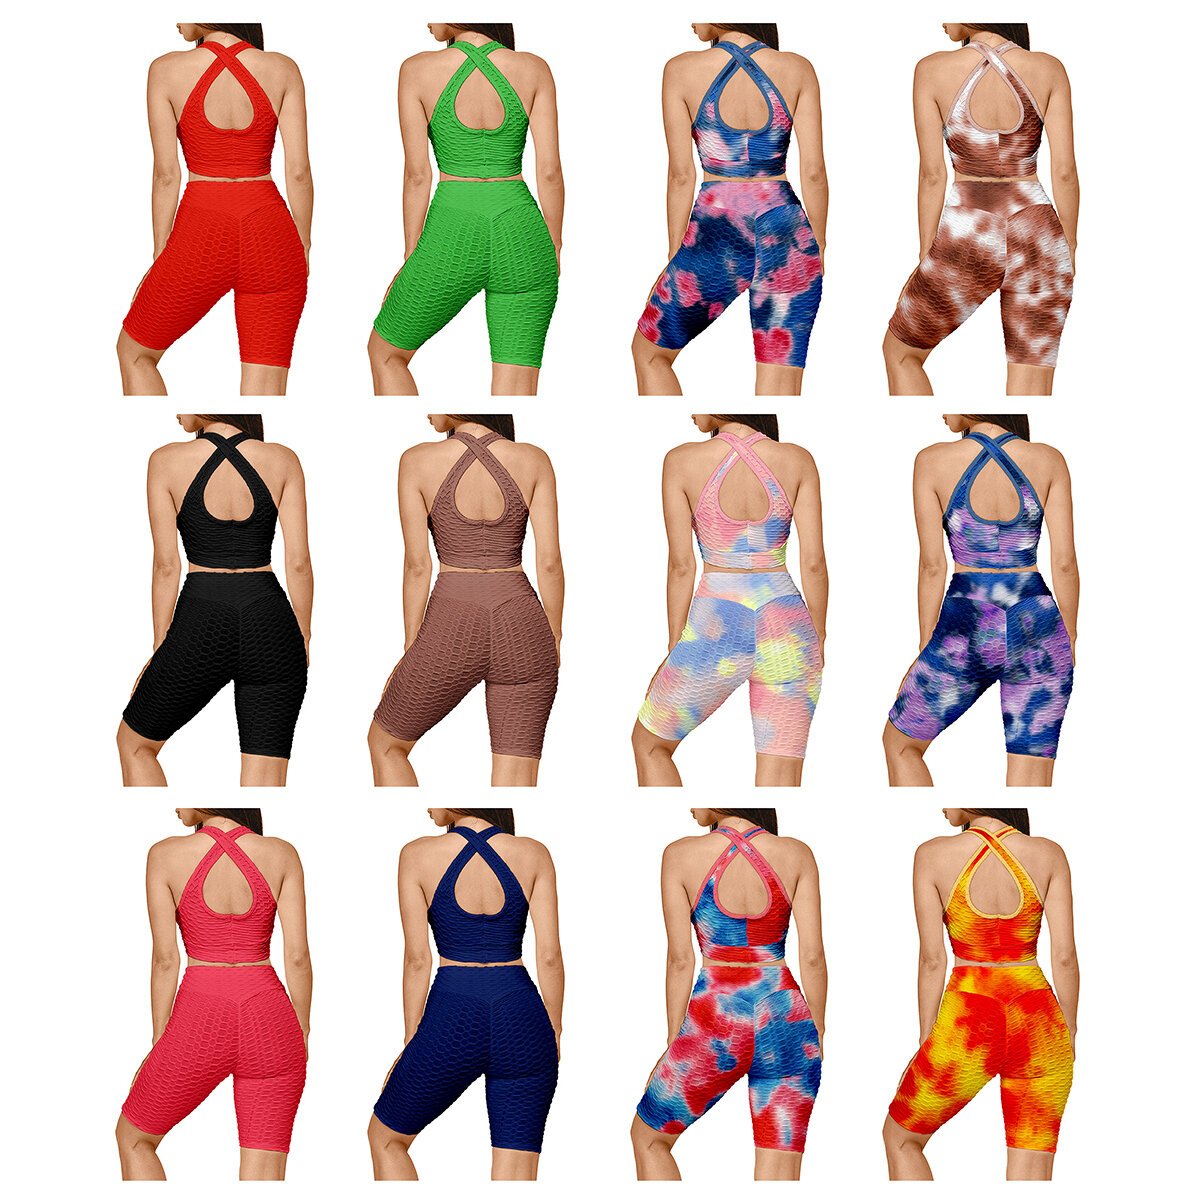 Women's Anti Cellulite Sports Bra & High Waisted Biker Shorts Workout Yoga Set - Tie-dye, Medium